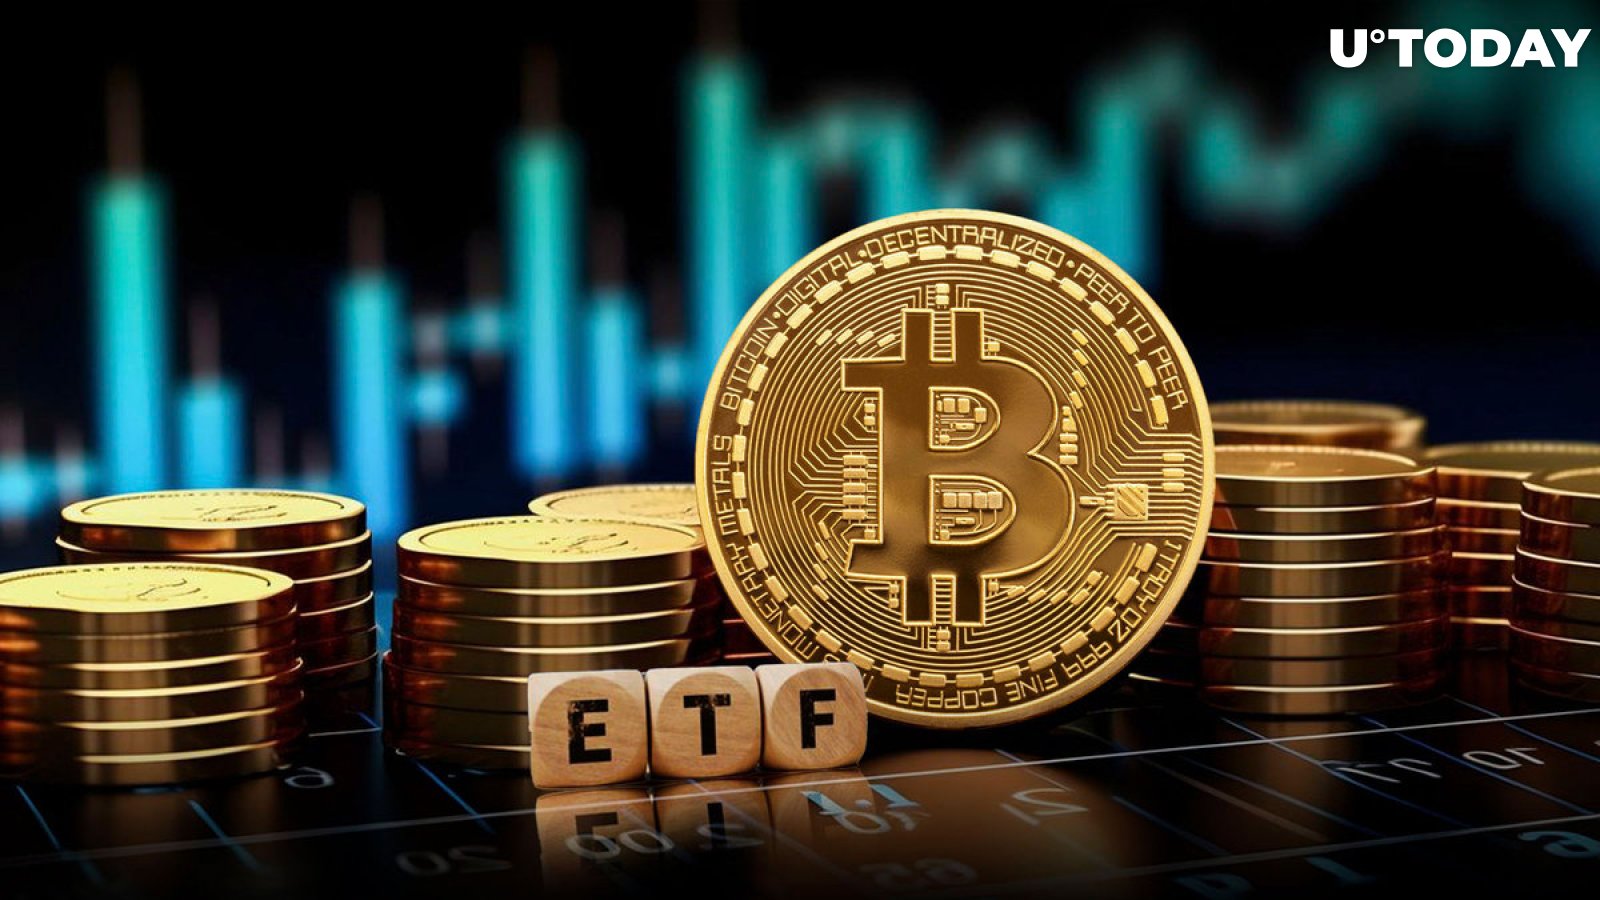 Finally, Bitcoin ETFs Are Making a Huge Comeback